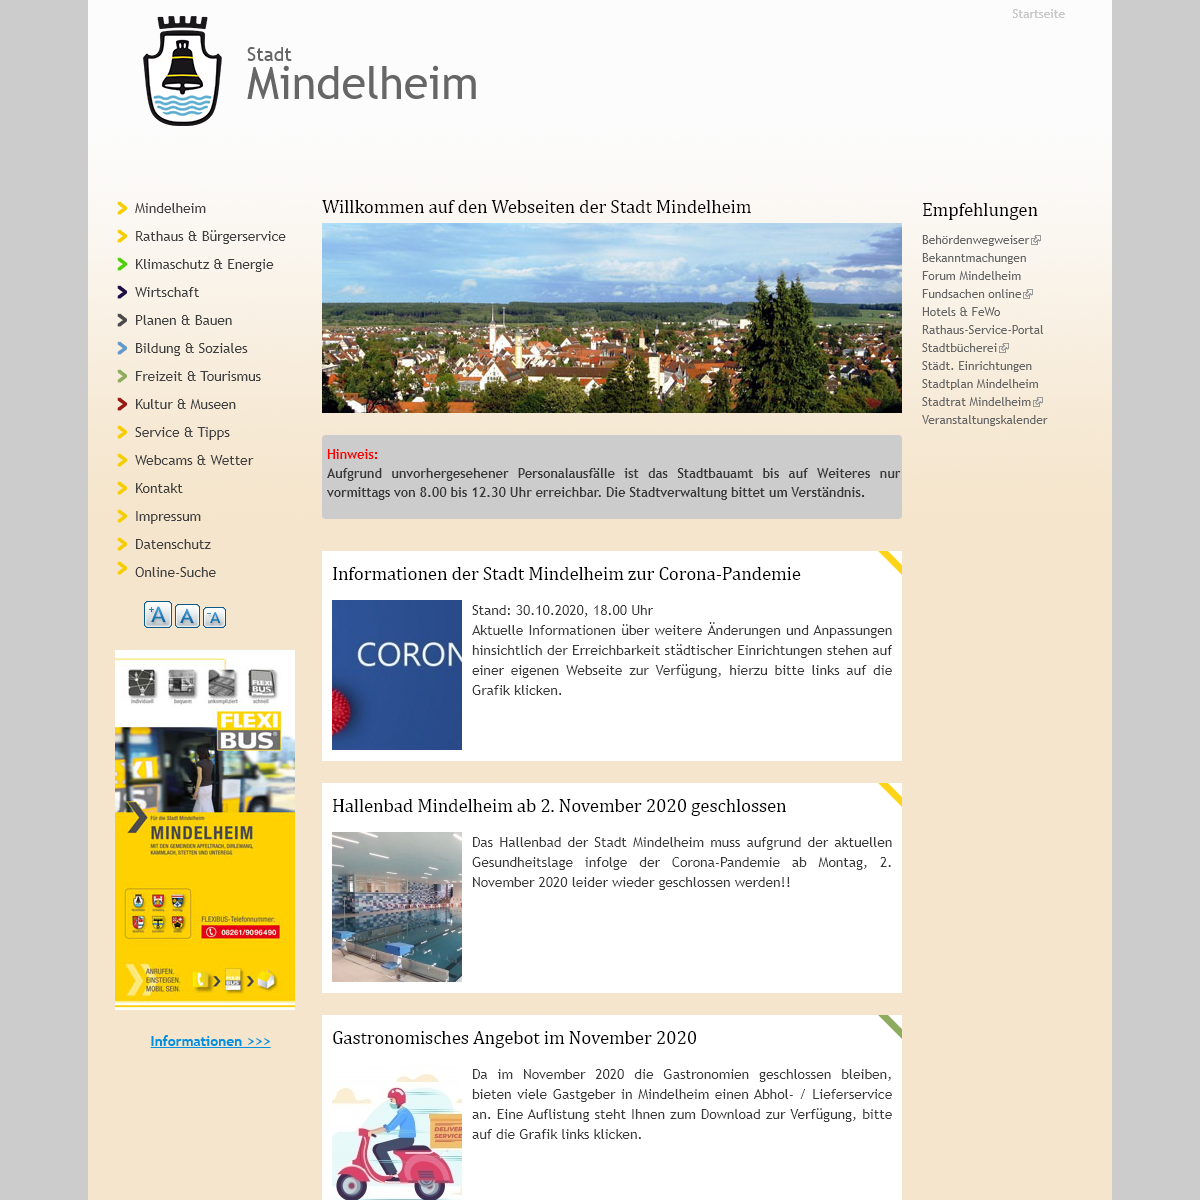 A complete backup of mindelheim.de